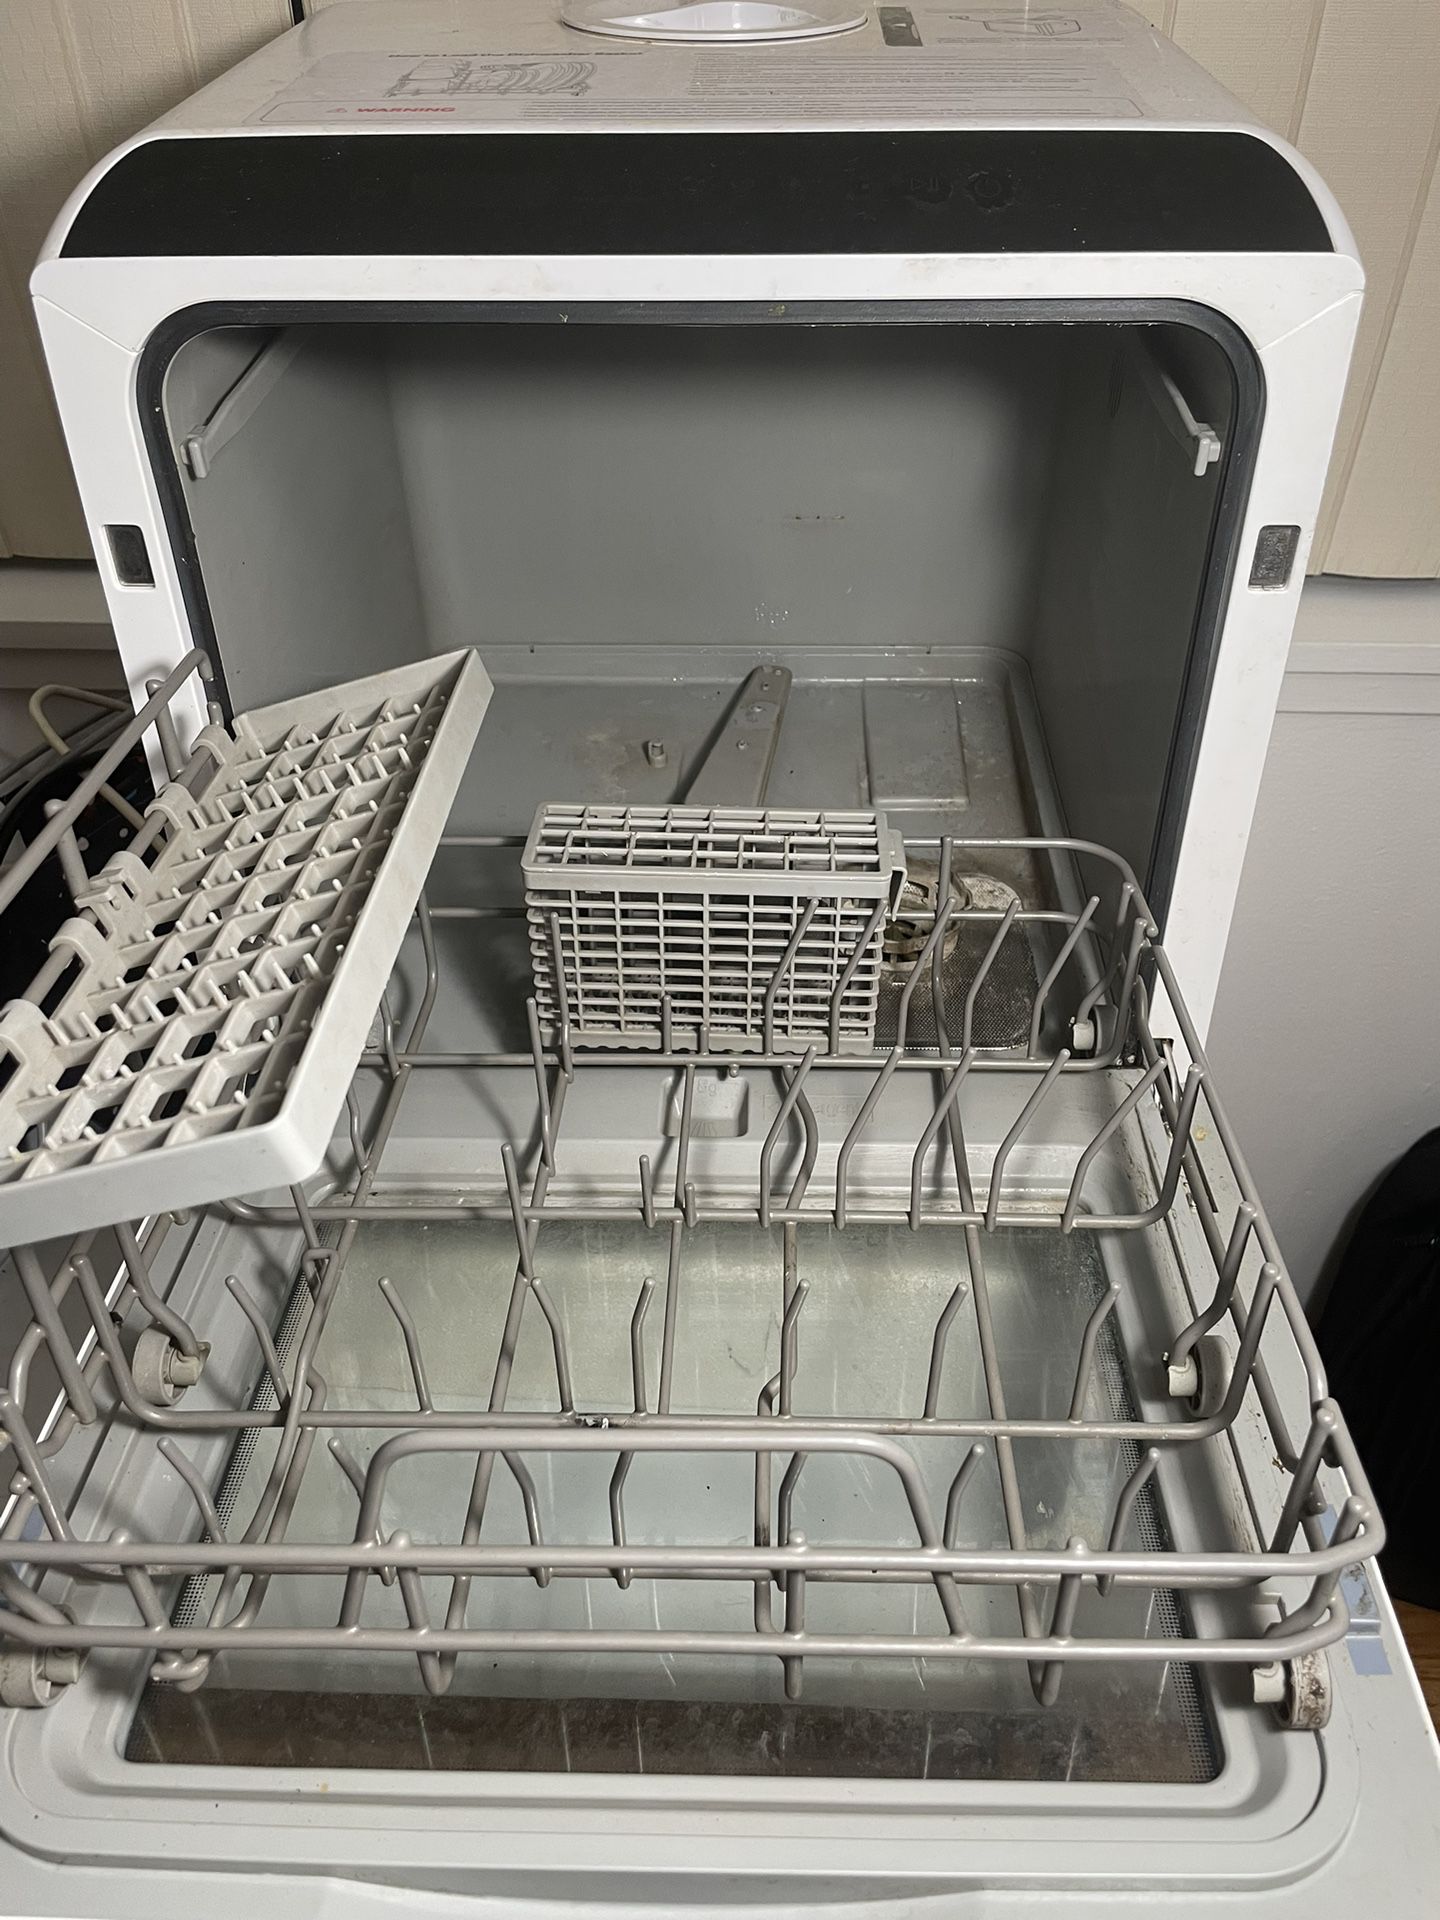 Brand New Novete Countertop Dishwasher for Sale in Honolulu, HI - OfferUp